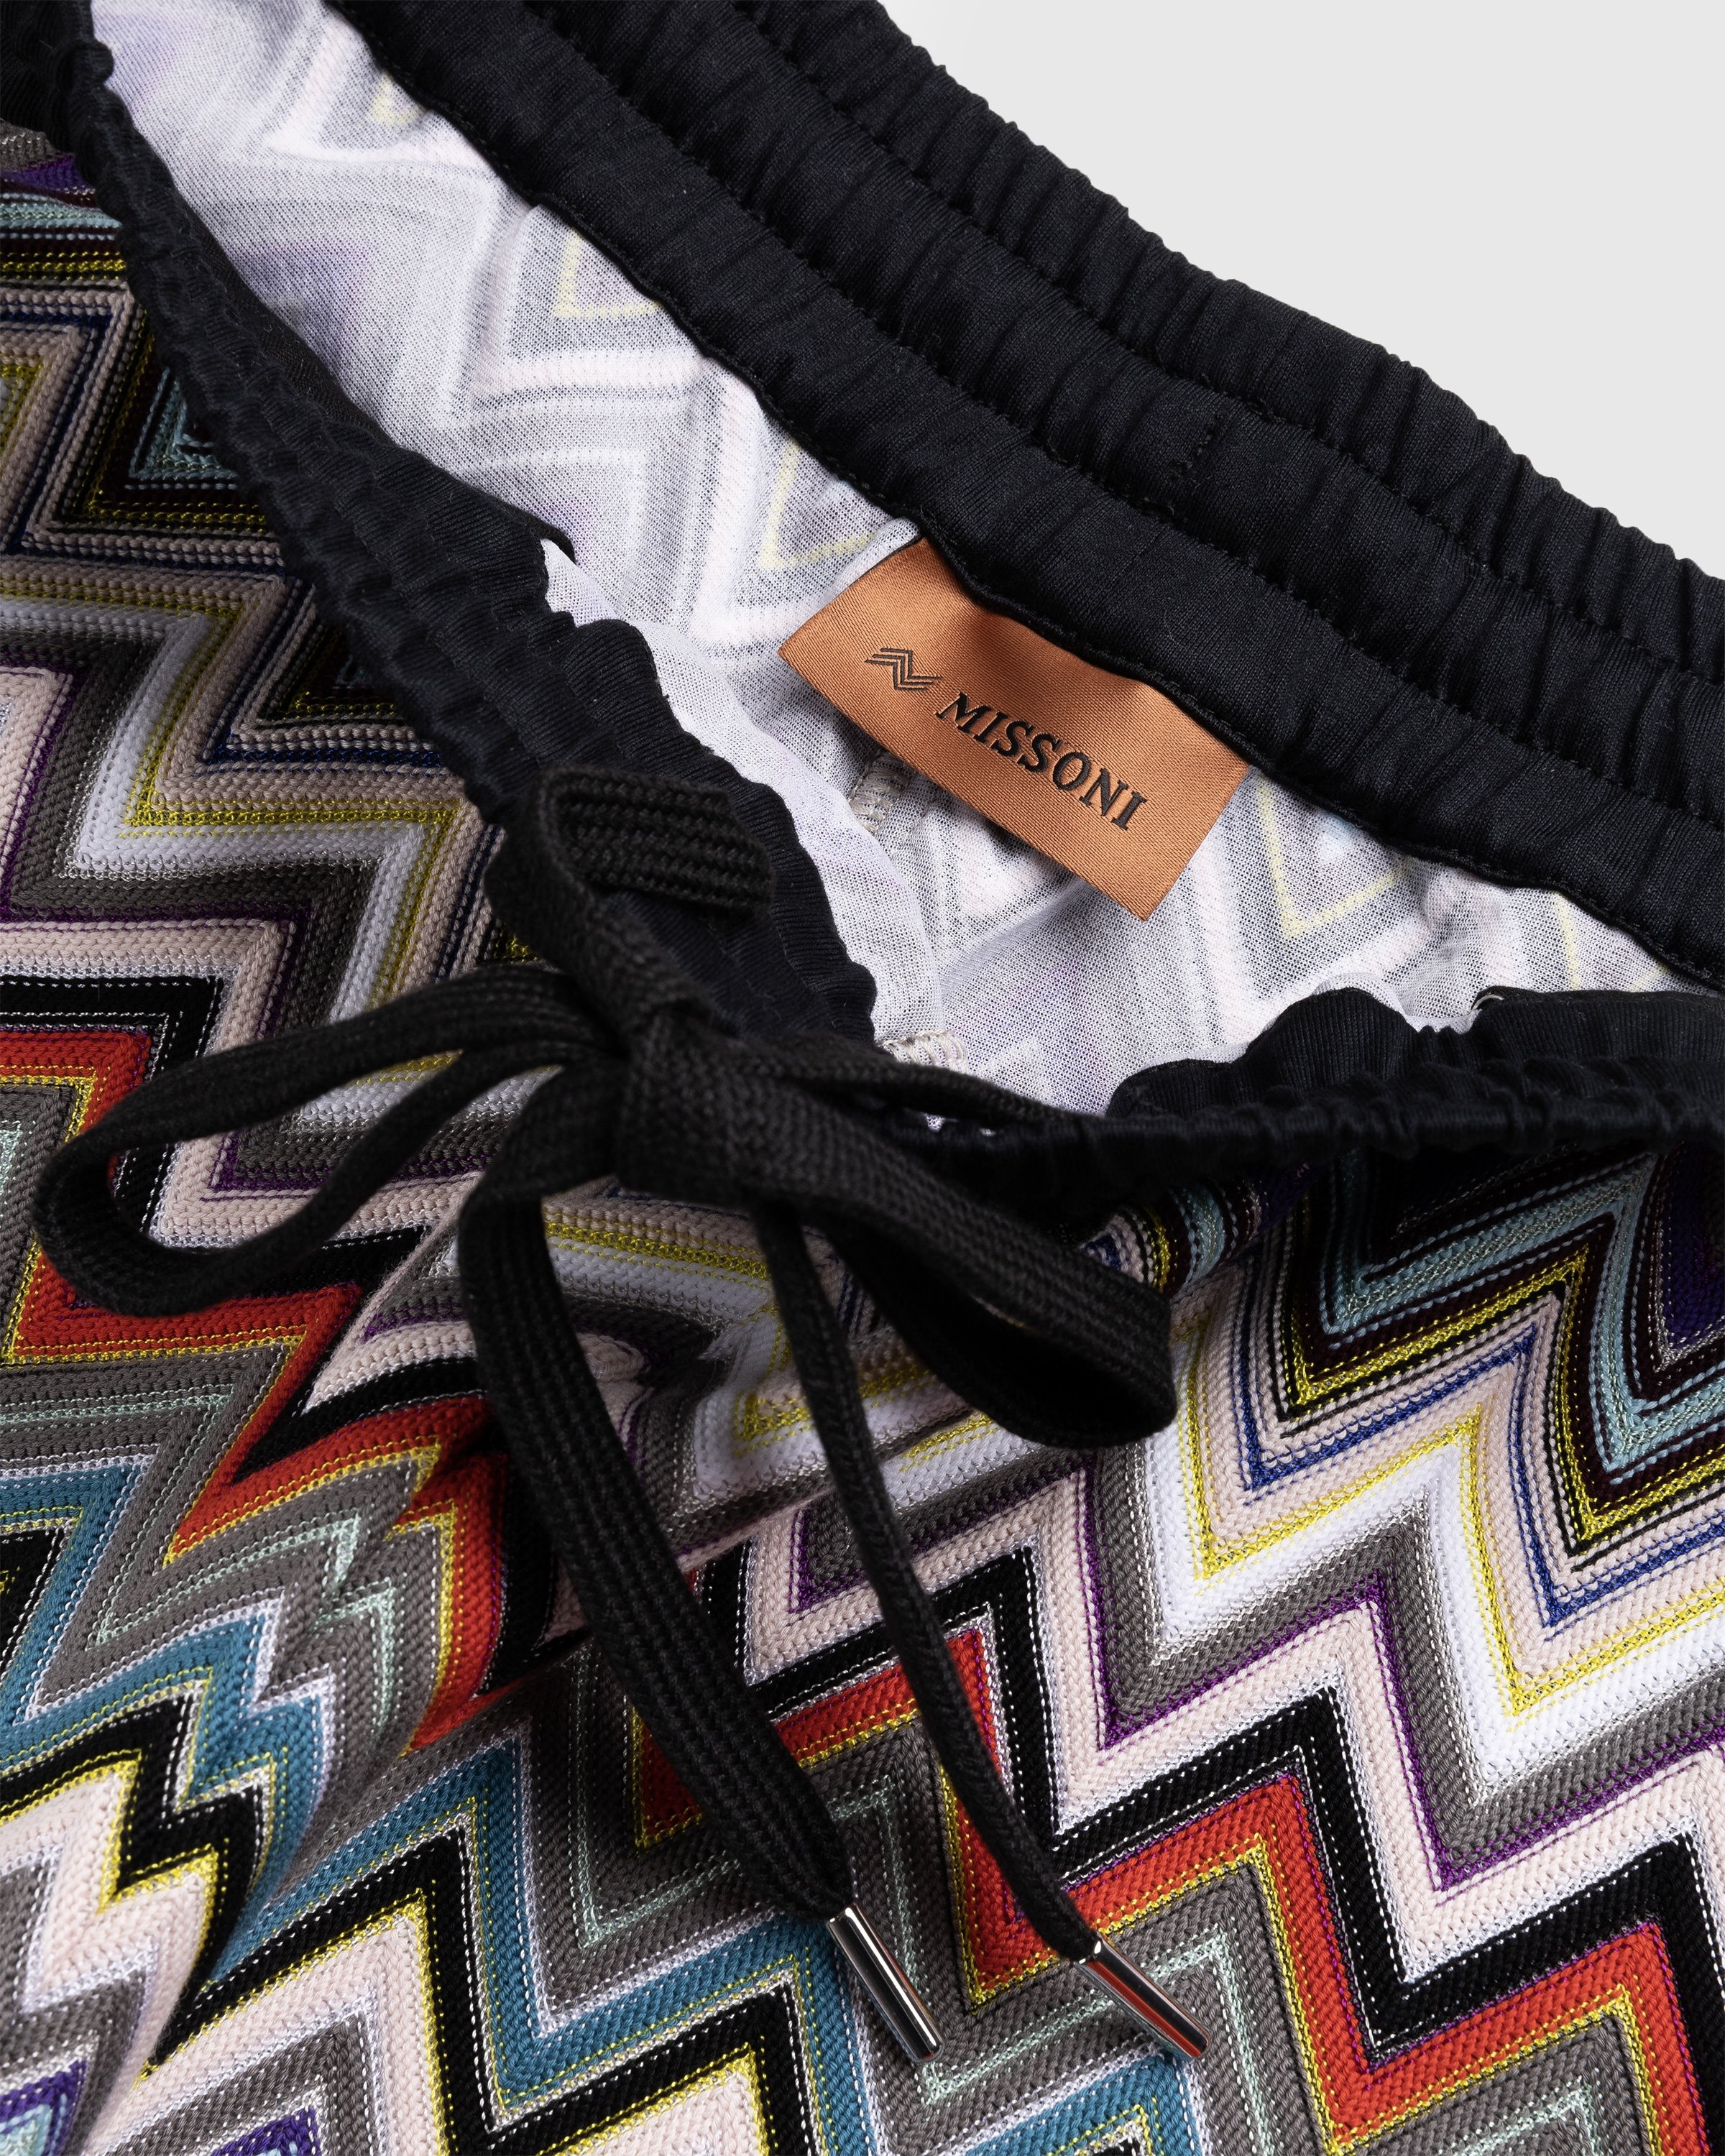 Missoni – Knitted Bermuda Shorts Multi - Shorts - Multi - Image 5